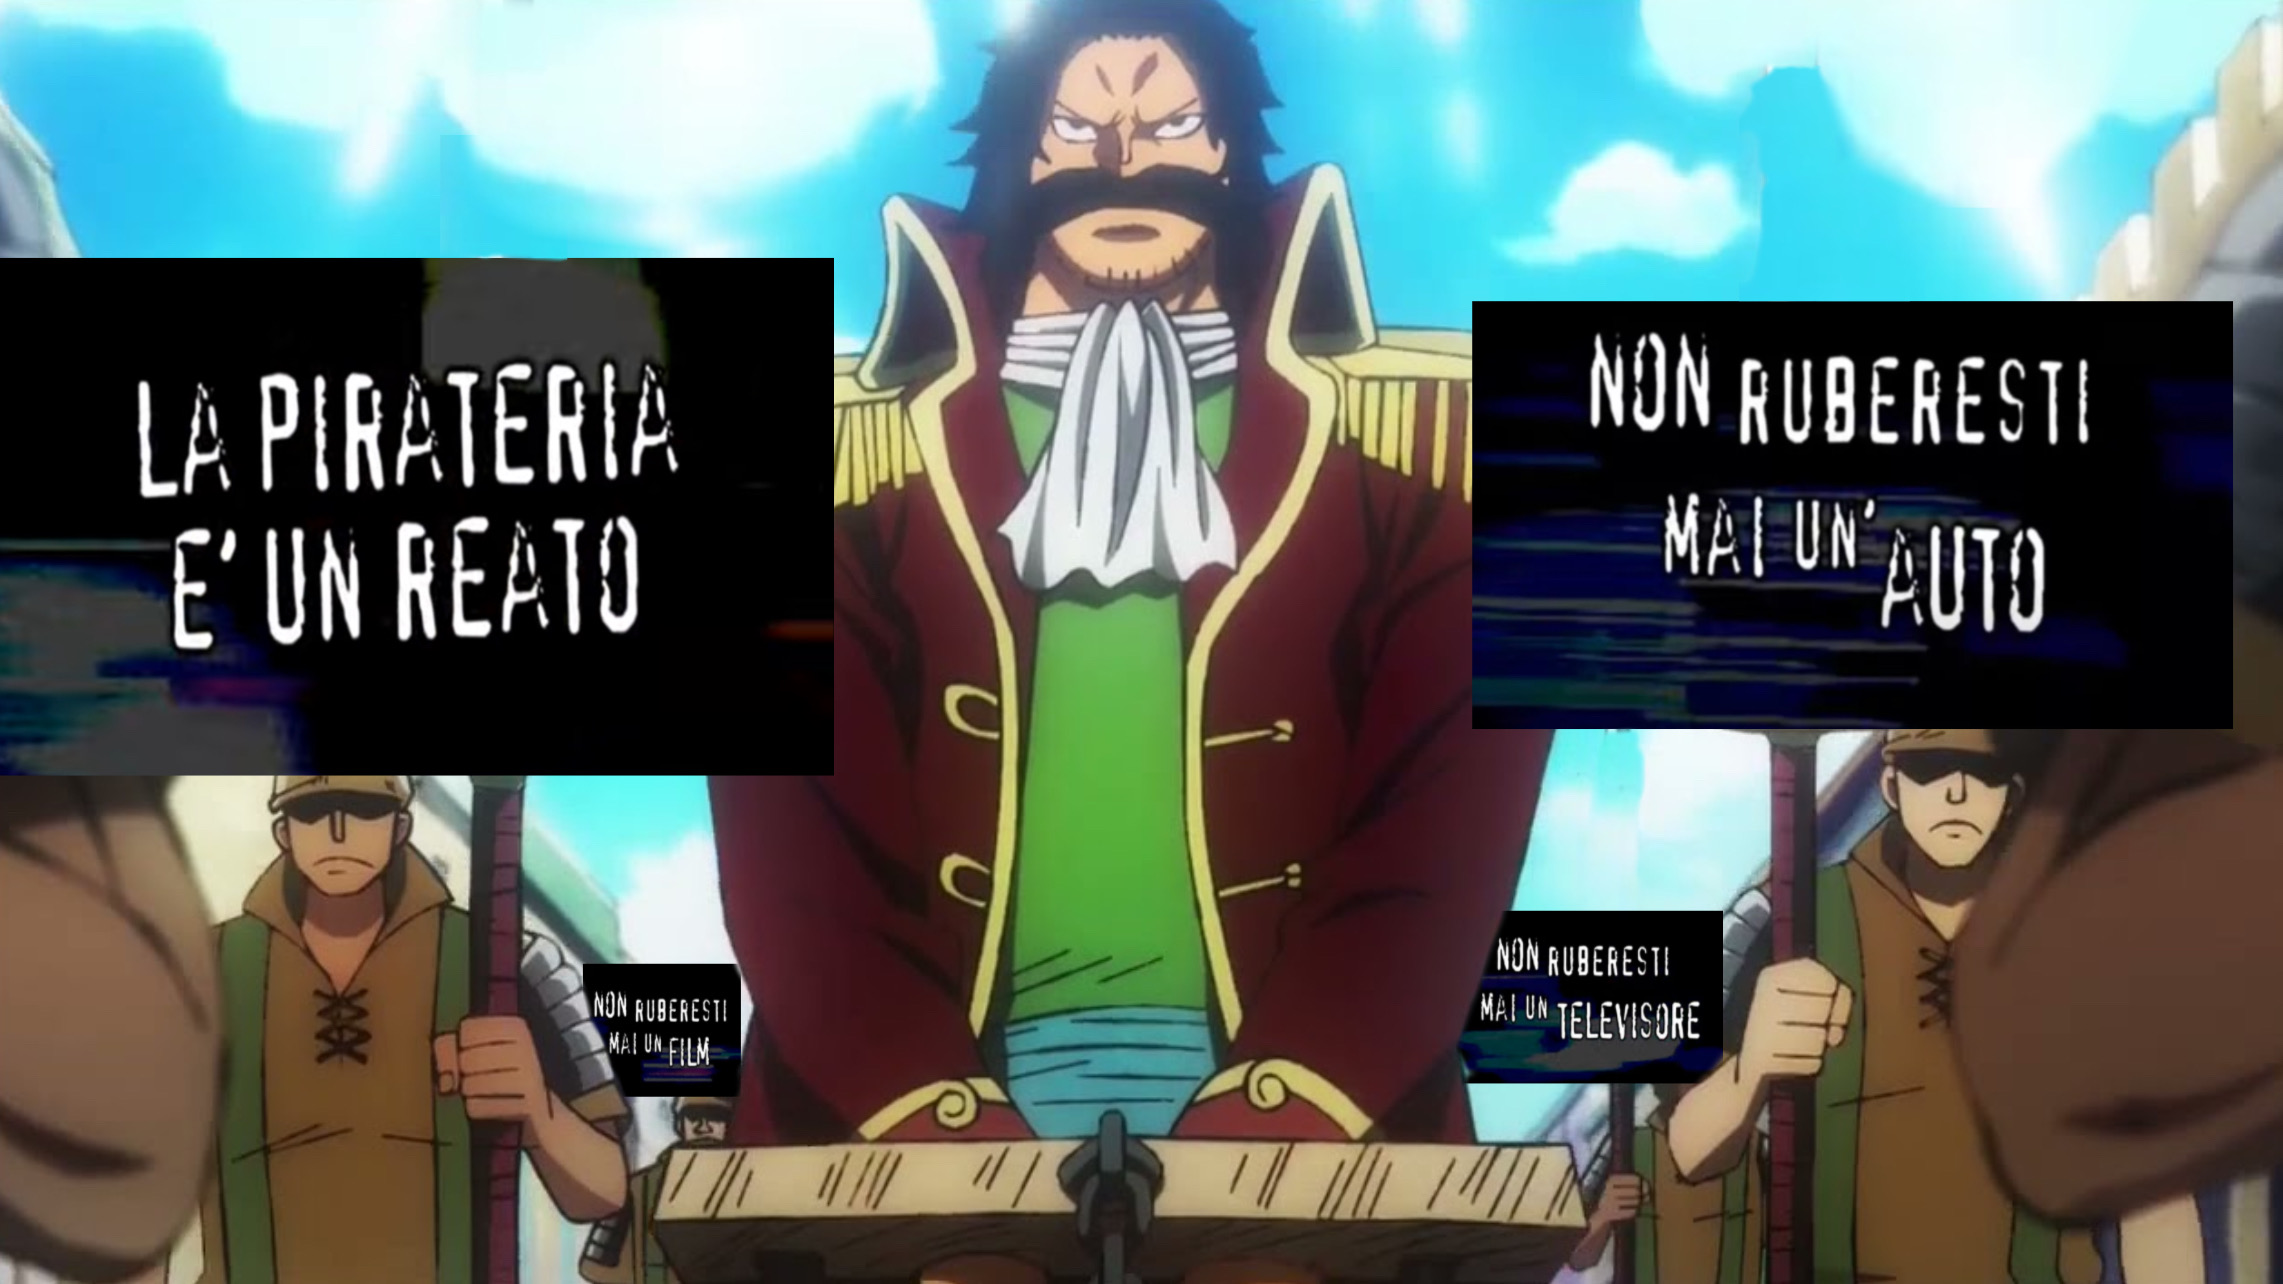 Gol D Roge e One Piece con cartelli per legge anti-pirateria